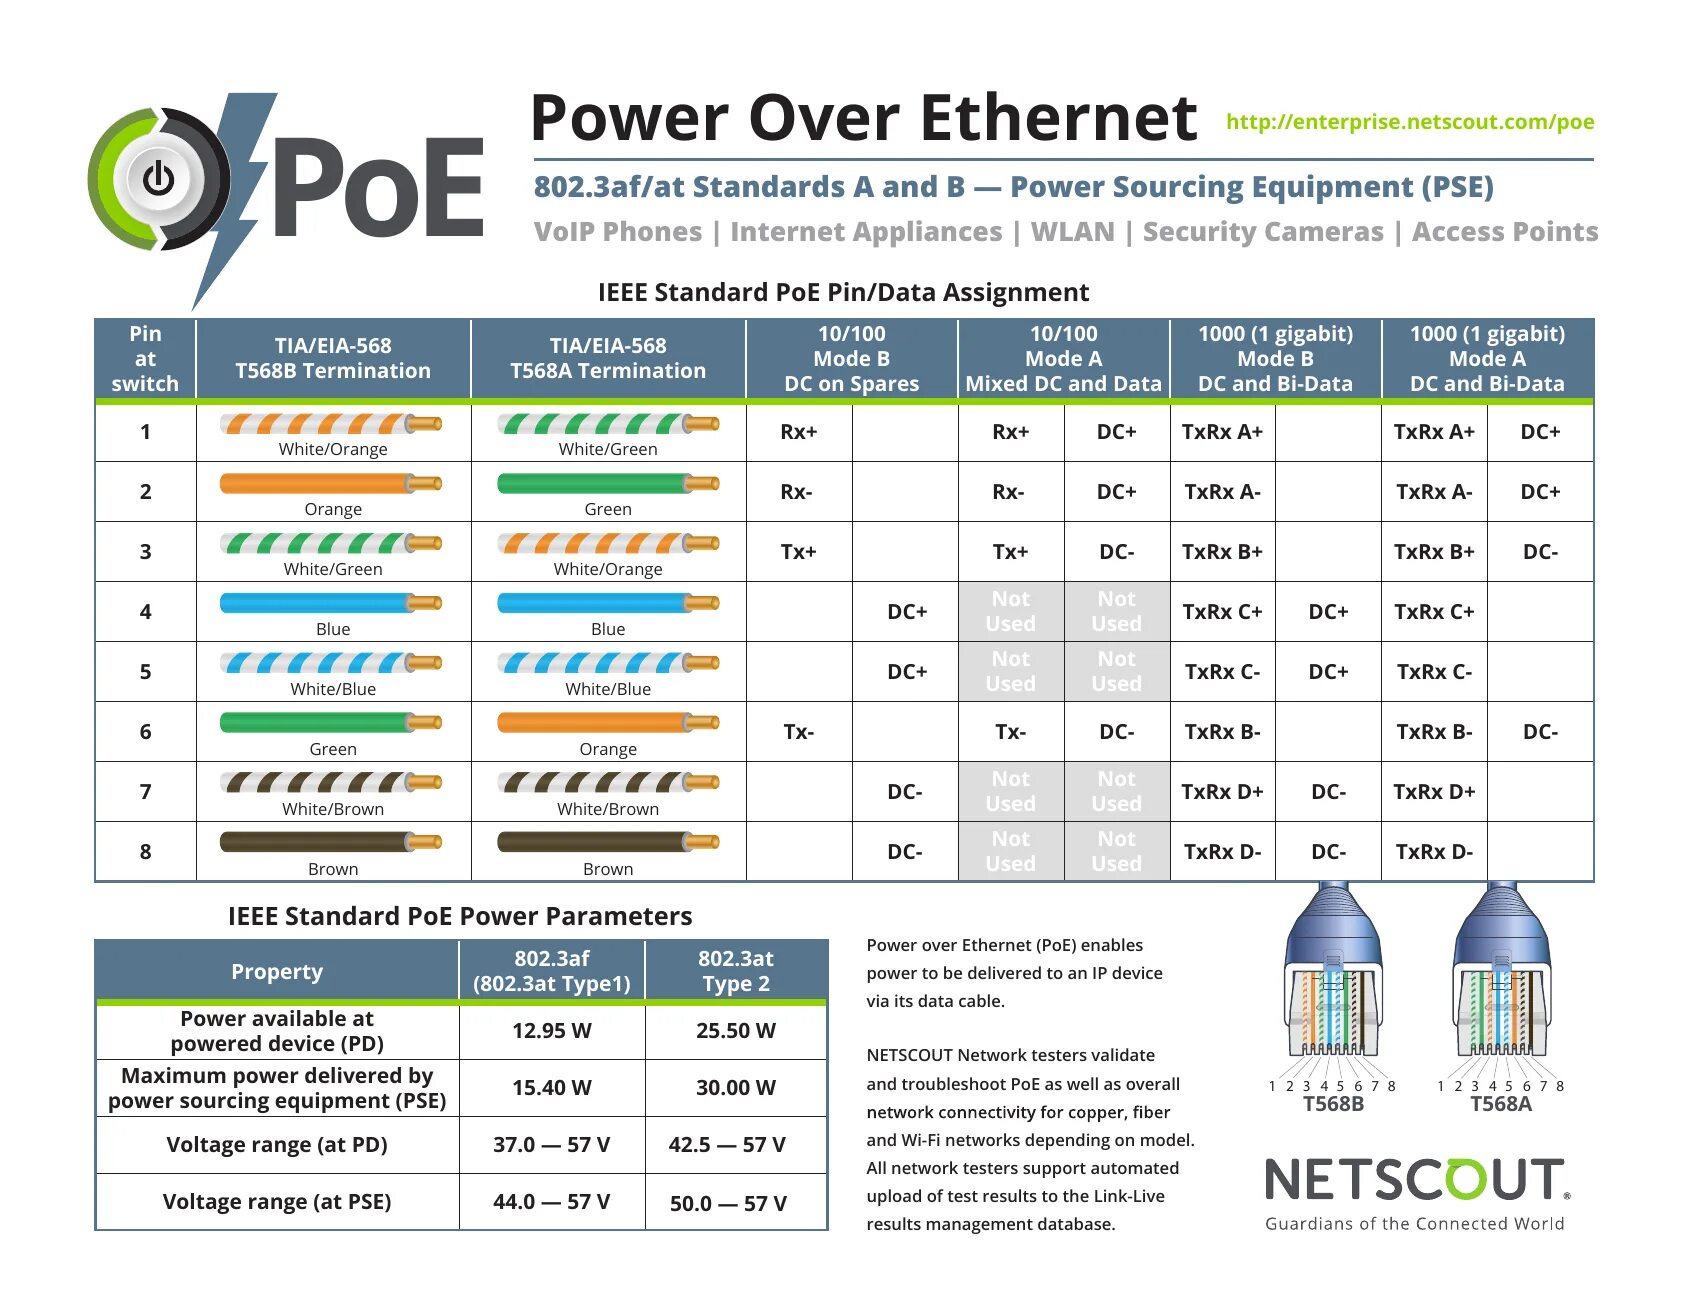 Poe передача. POE 802.3at распиновка. POE стандарты 802.3af/at. Power over Ethernet (POE; стандарт IEEE 802.3af (802.3at Type 1. POE 802.3af распиновка.